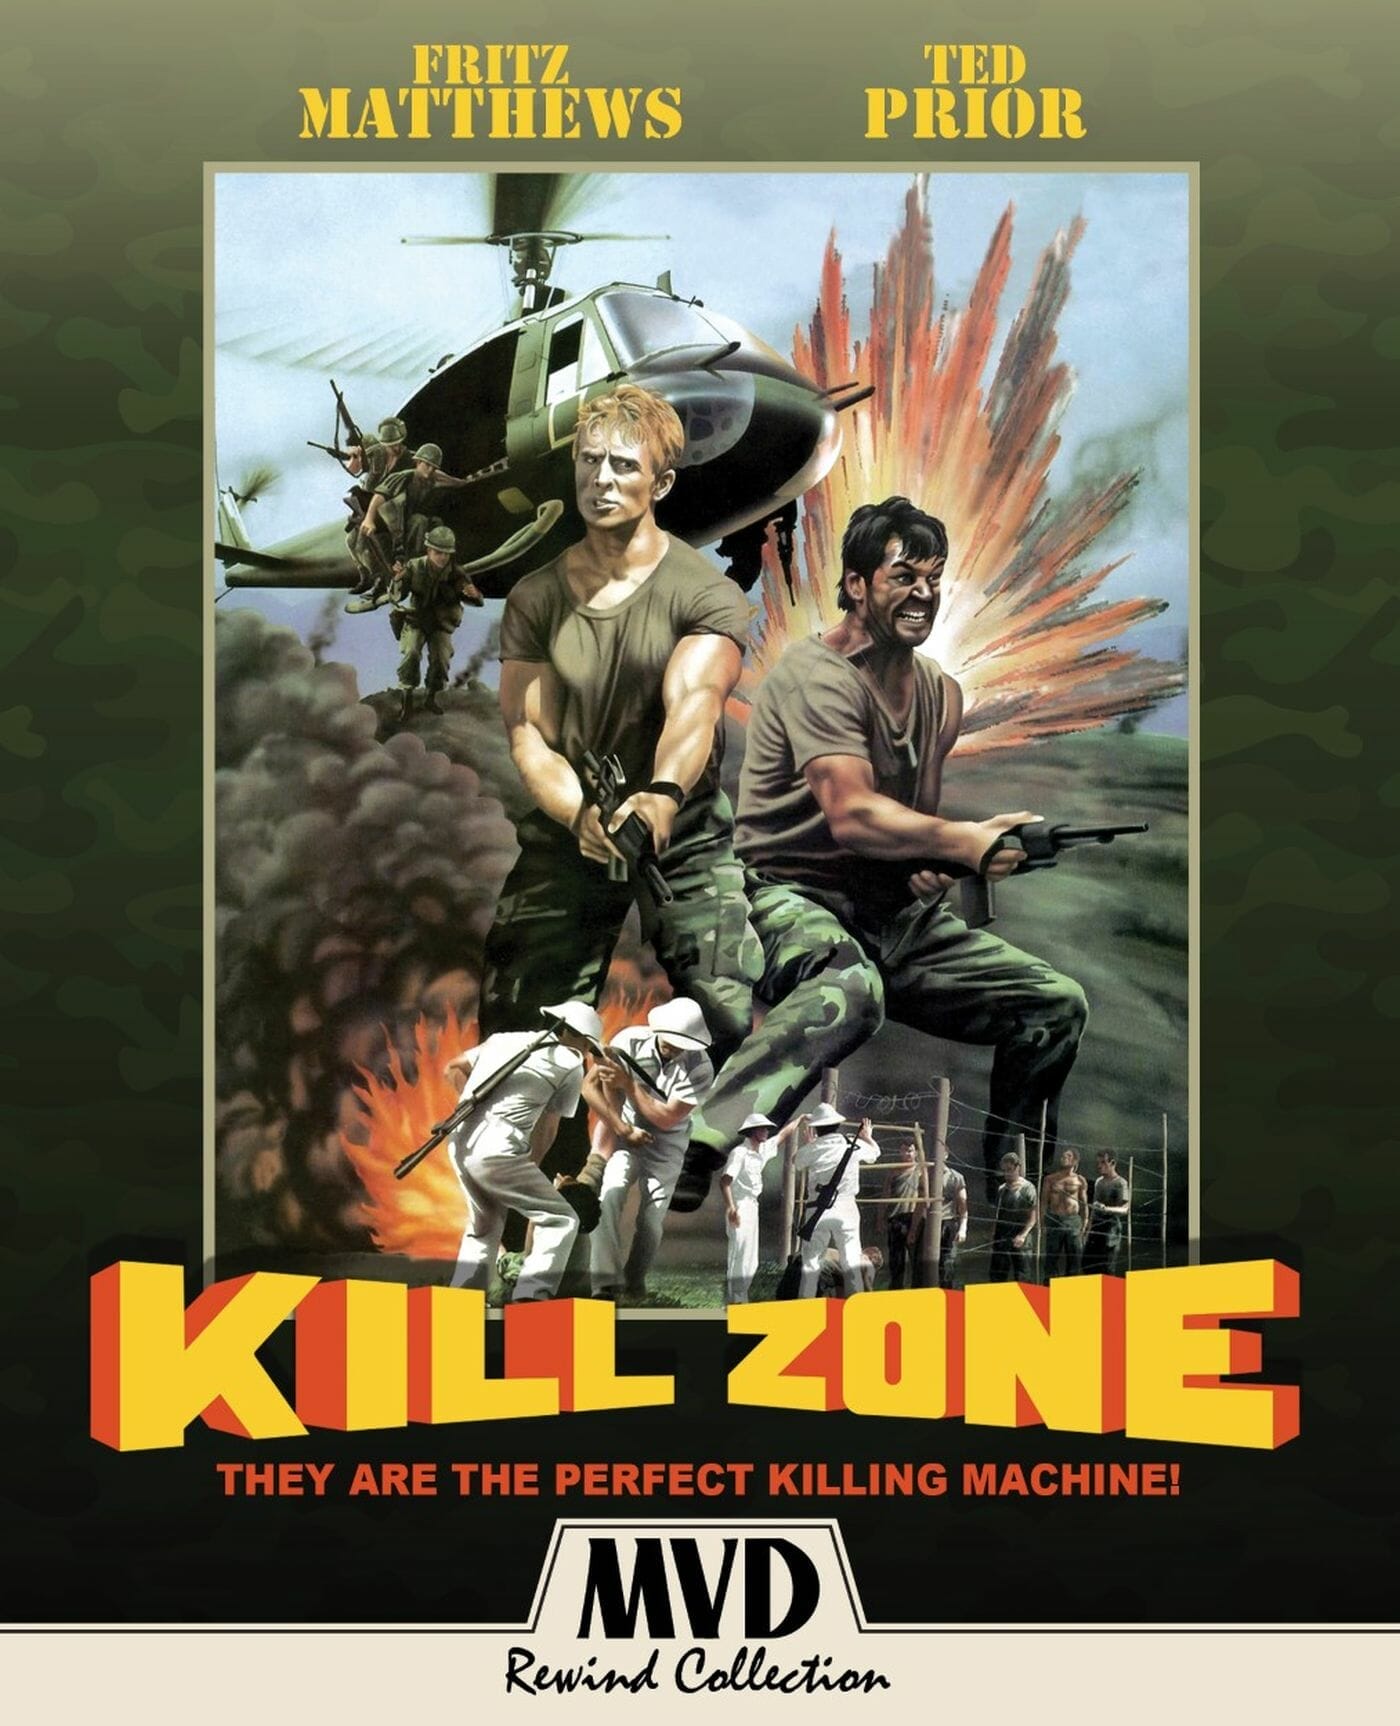 Kill Zone Part 2 aka Fatal Move (DVD)